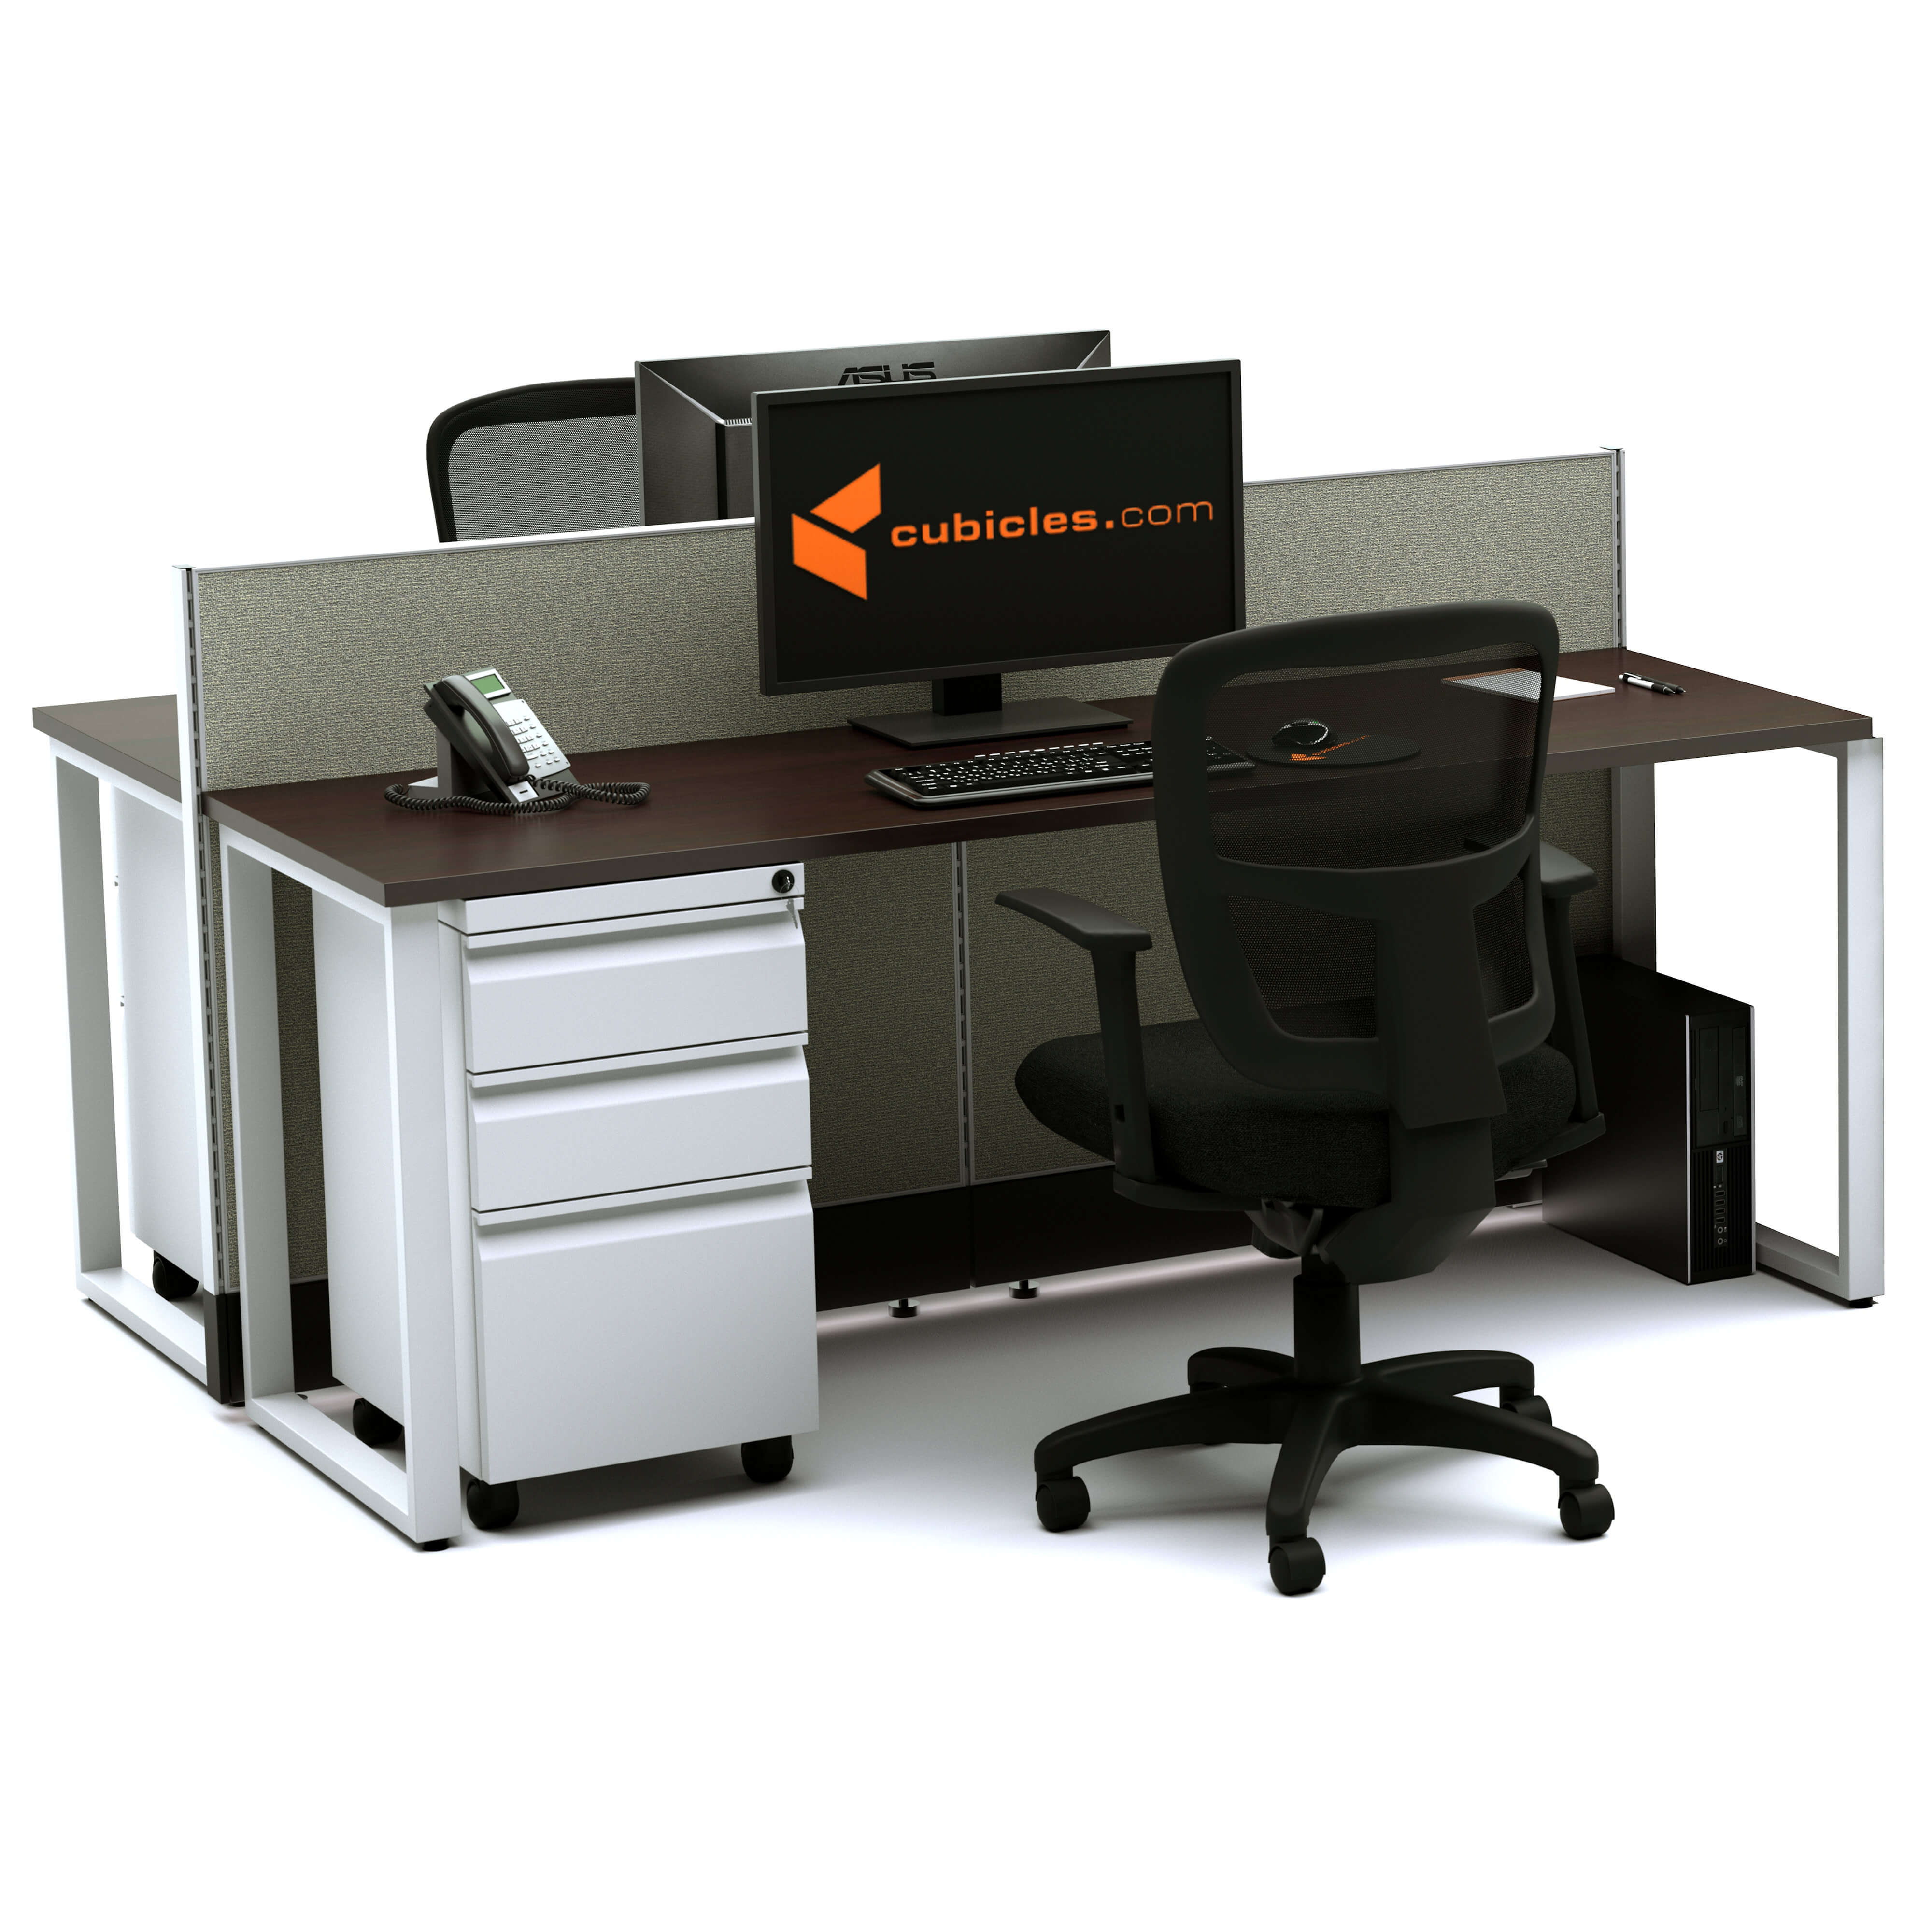 office-benching-office-benching-desks-1-2-3-4-5-6-7-8-9-10-11-12-13.jpg